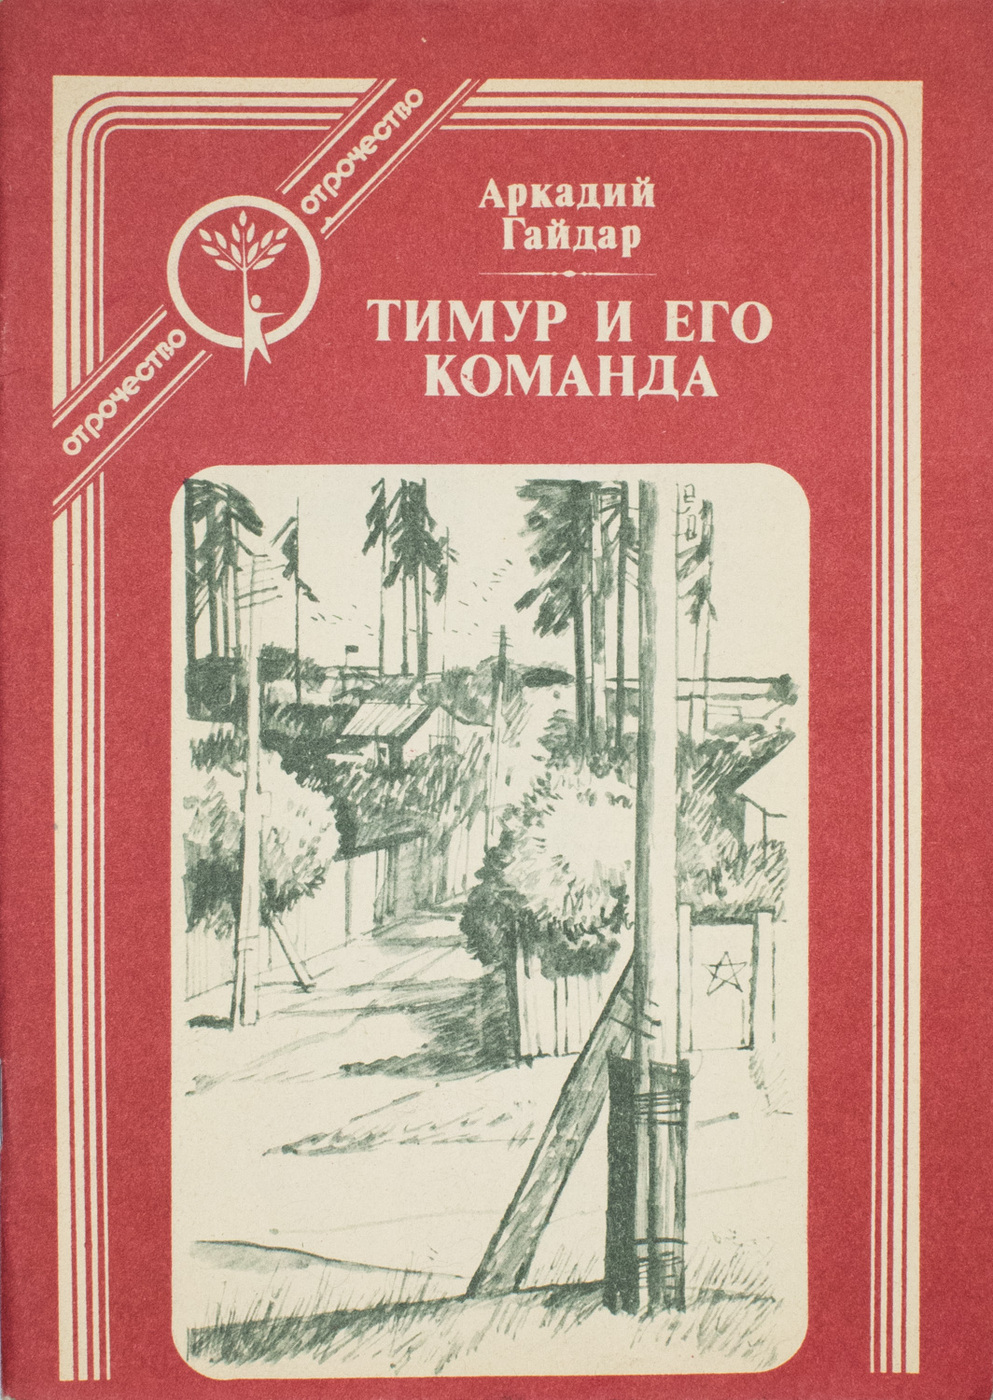 Тимур и его команда издание 1941 года